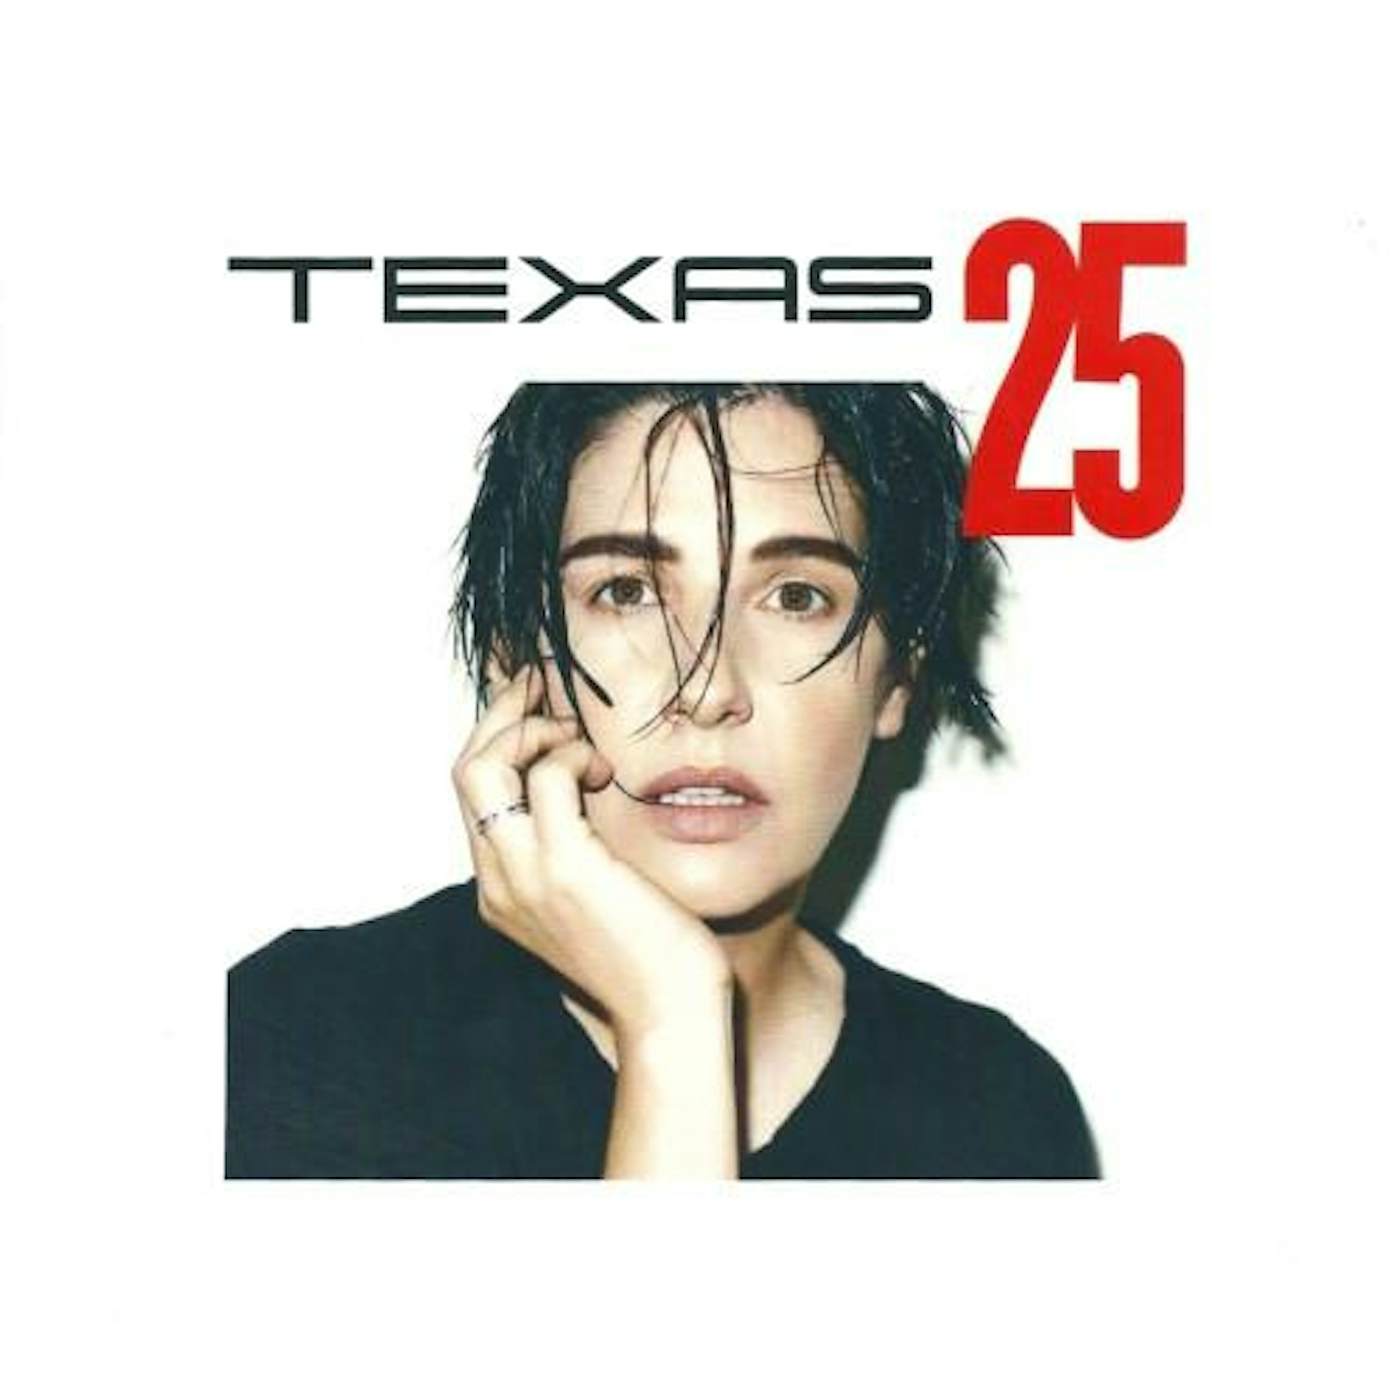 Texas 25 Vinyl Record